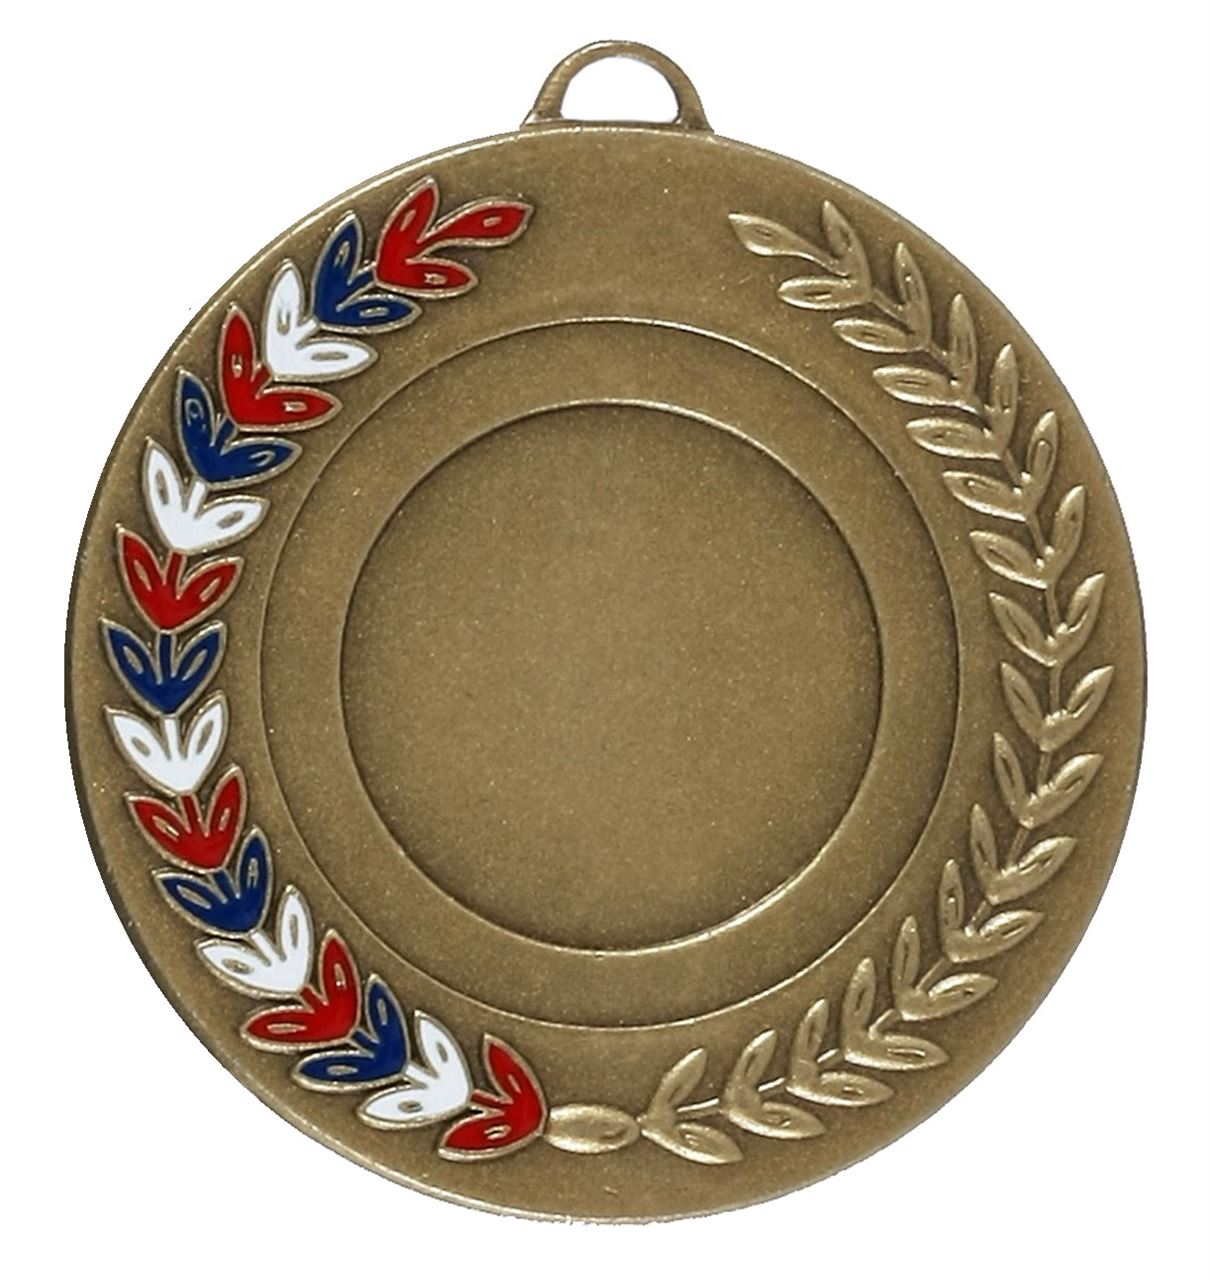 Bronze Red, White & Blue Enamel Laurel Medal (size: 50mm) - 5770